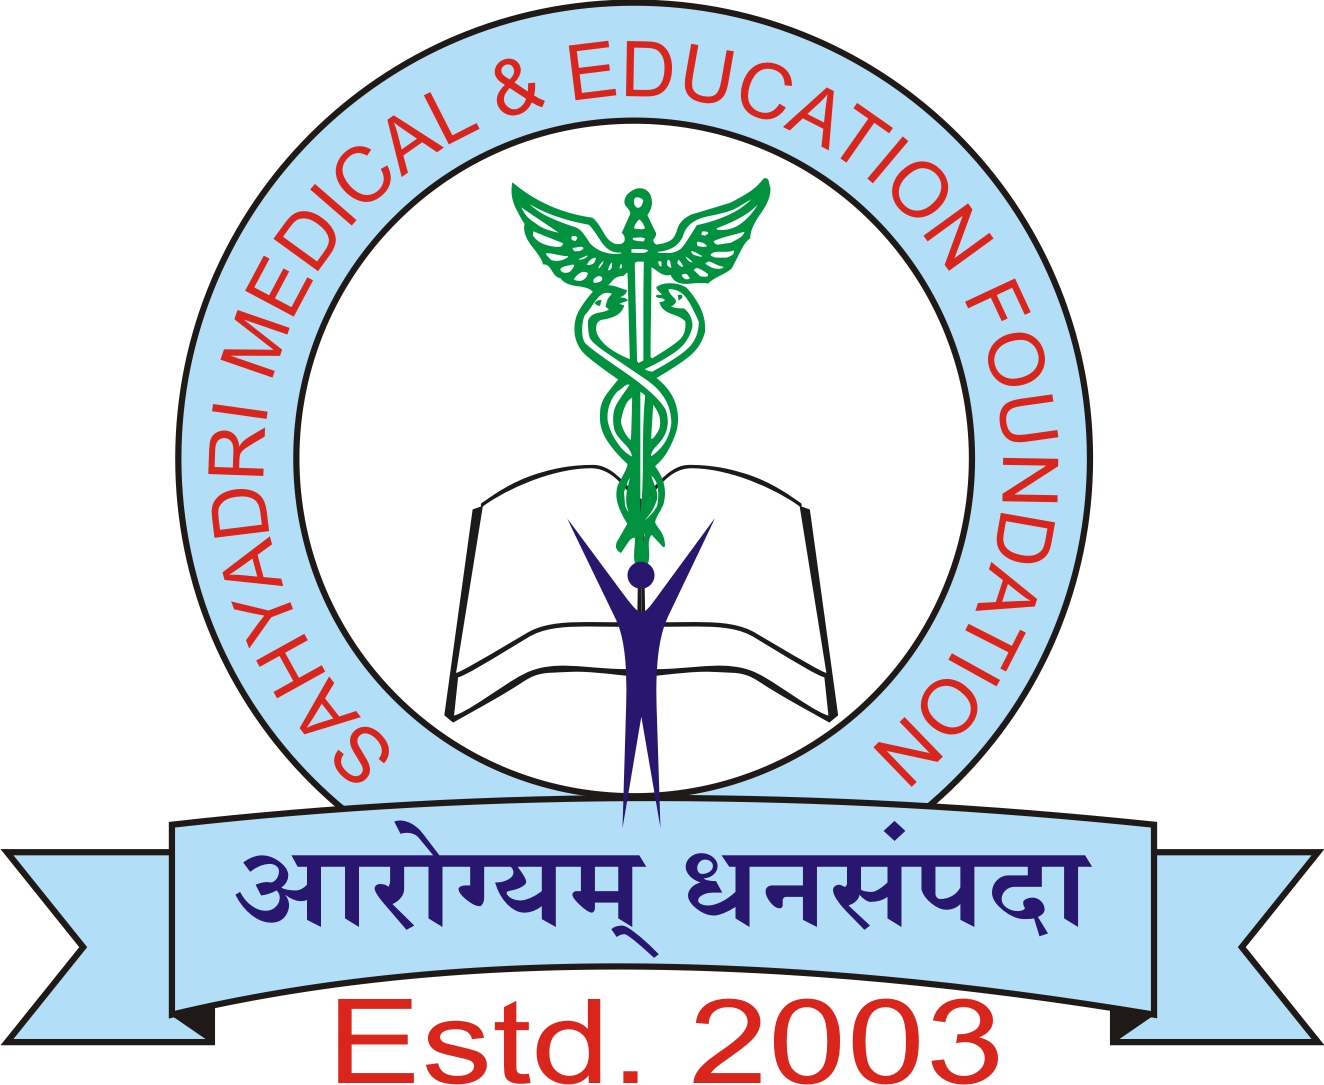 Sahyadri Medical and Education Foundation